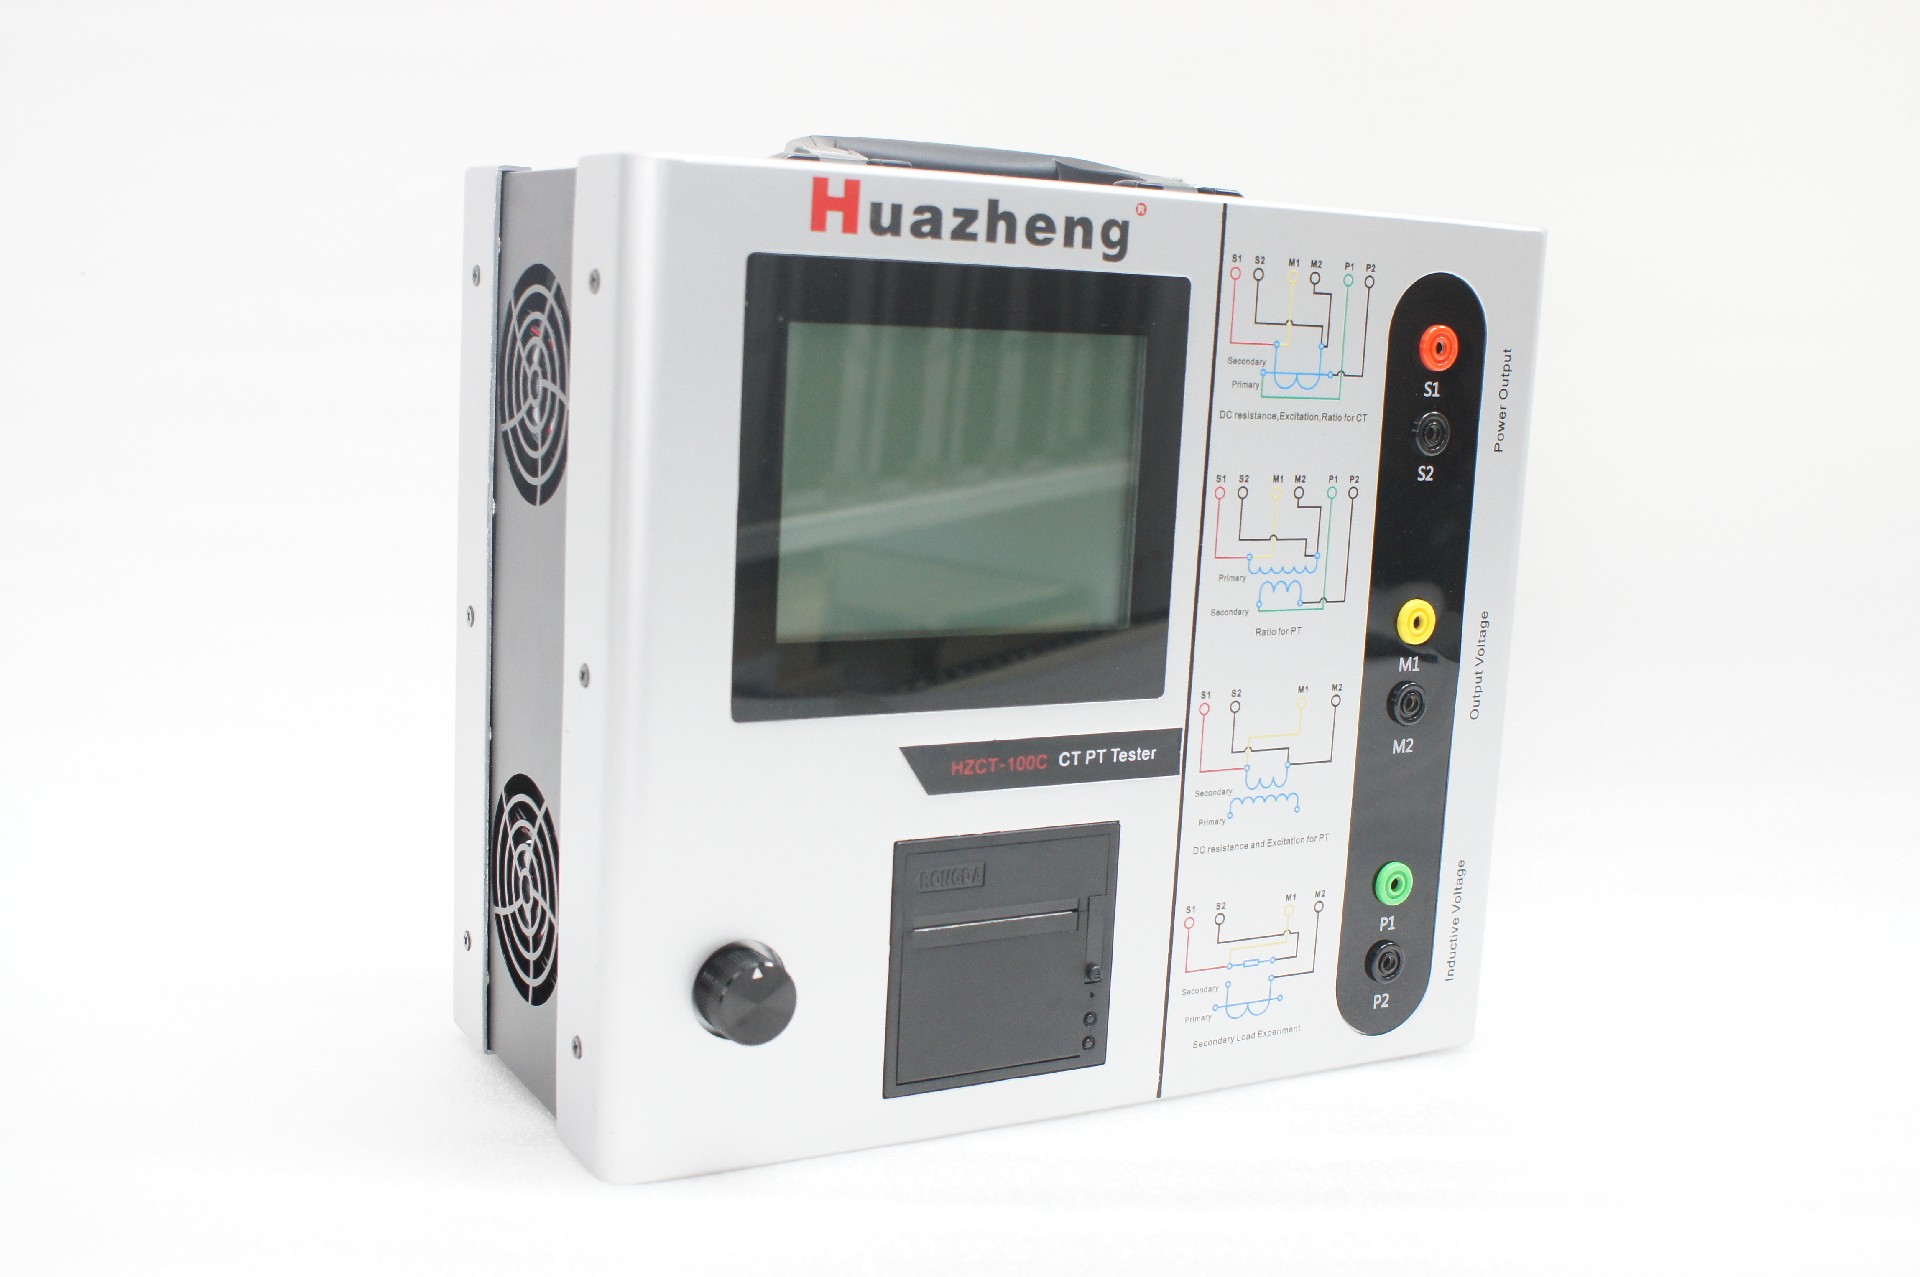 HZCT-100C Transformer Tester